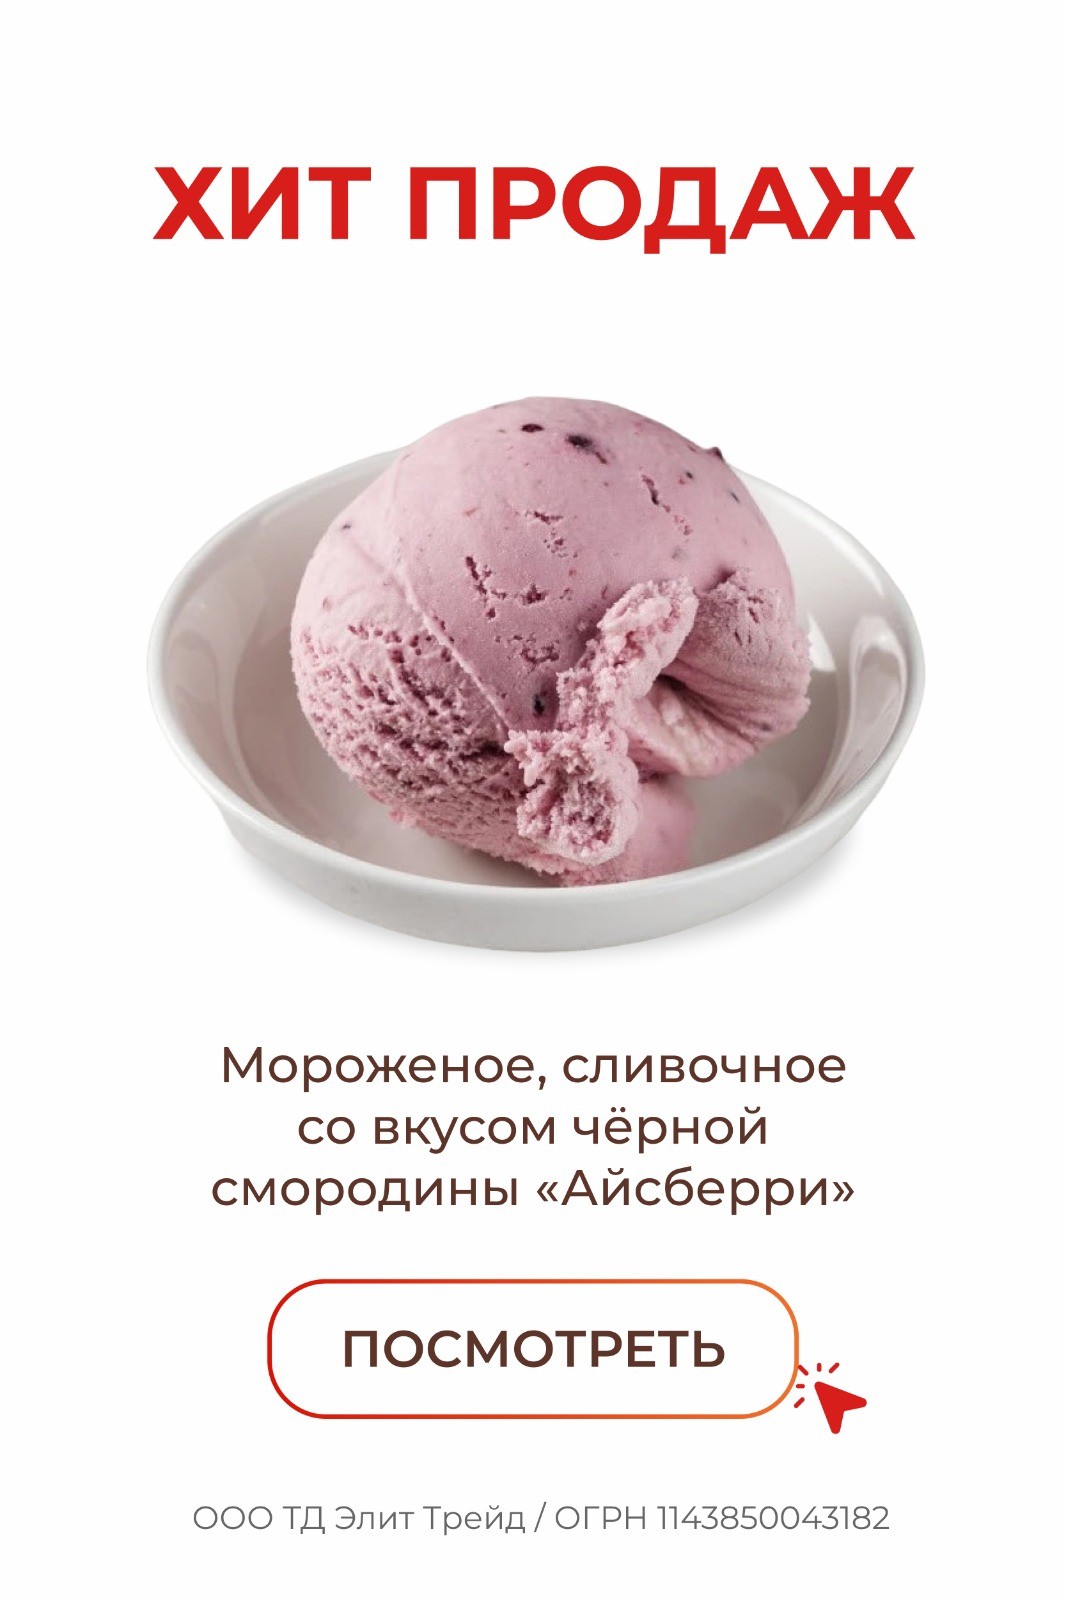 Фаст-фуд (мороженое)